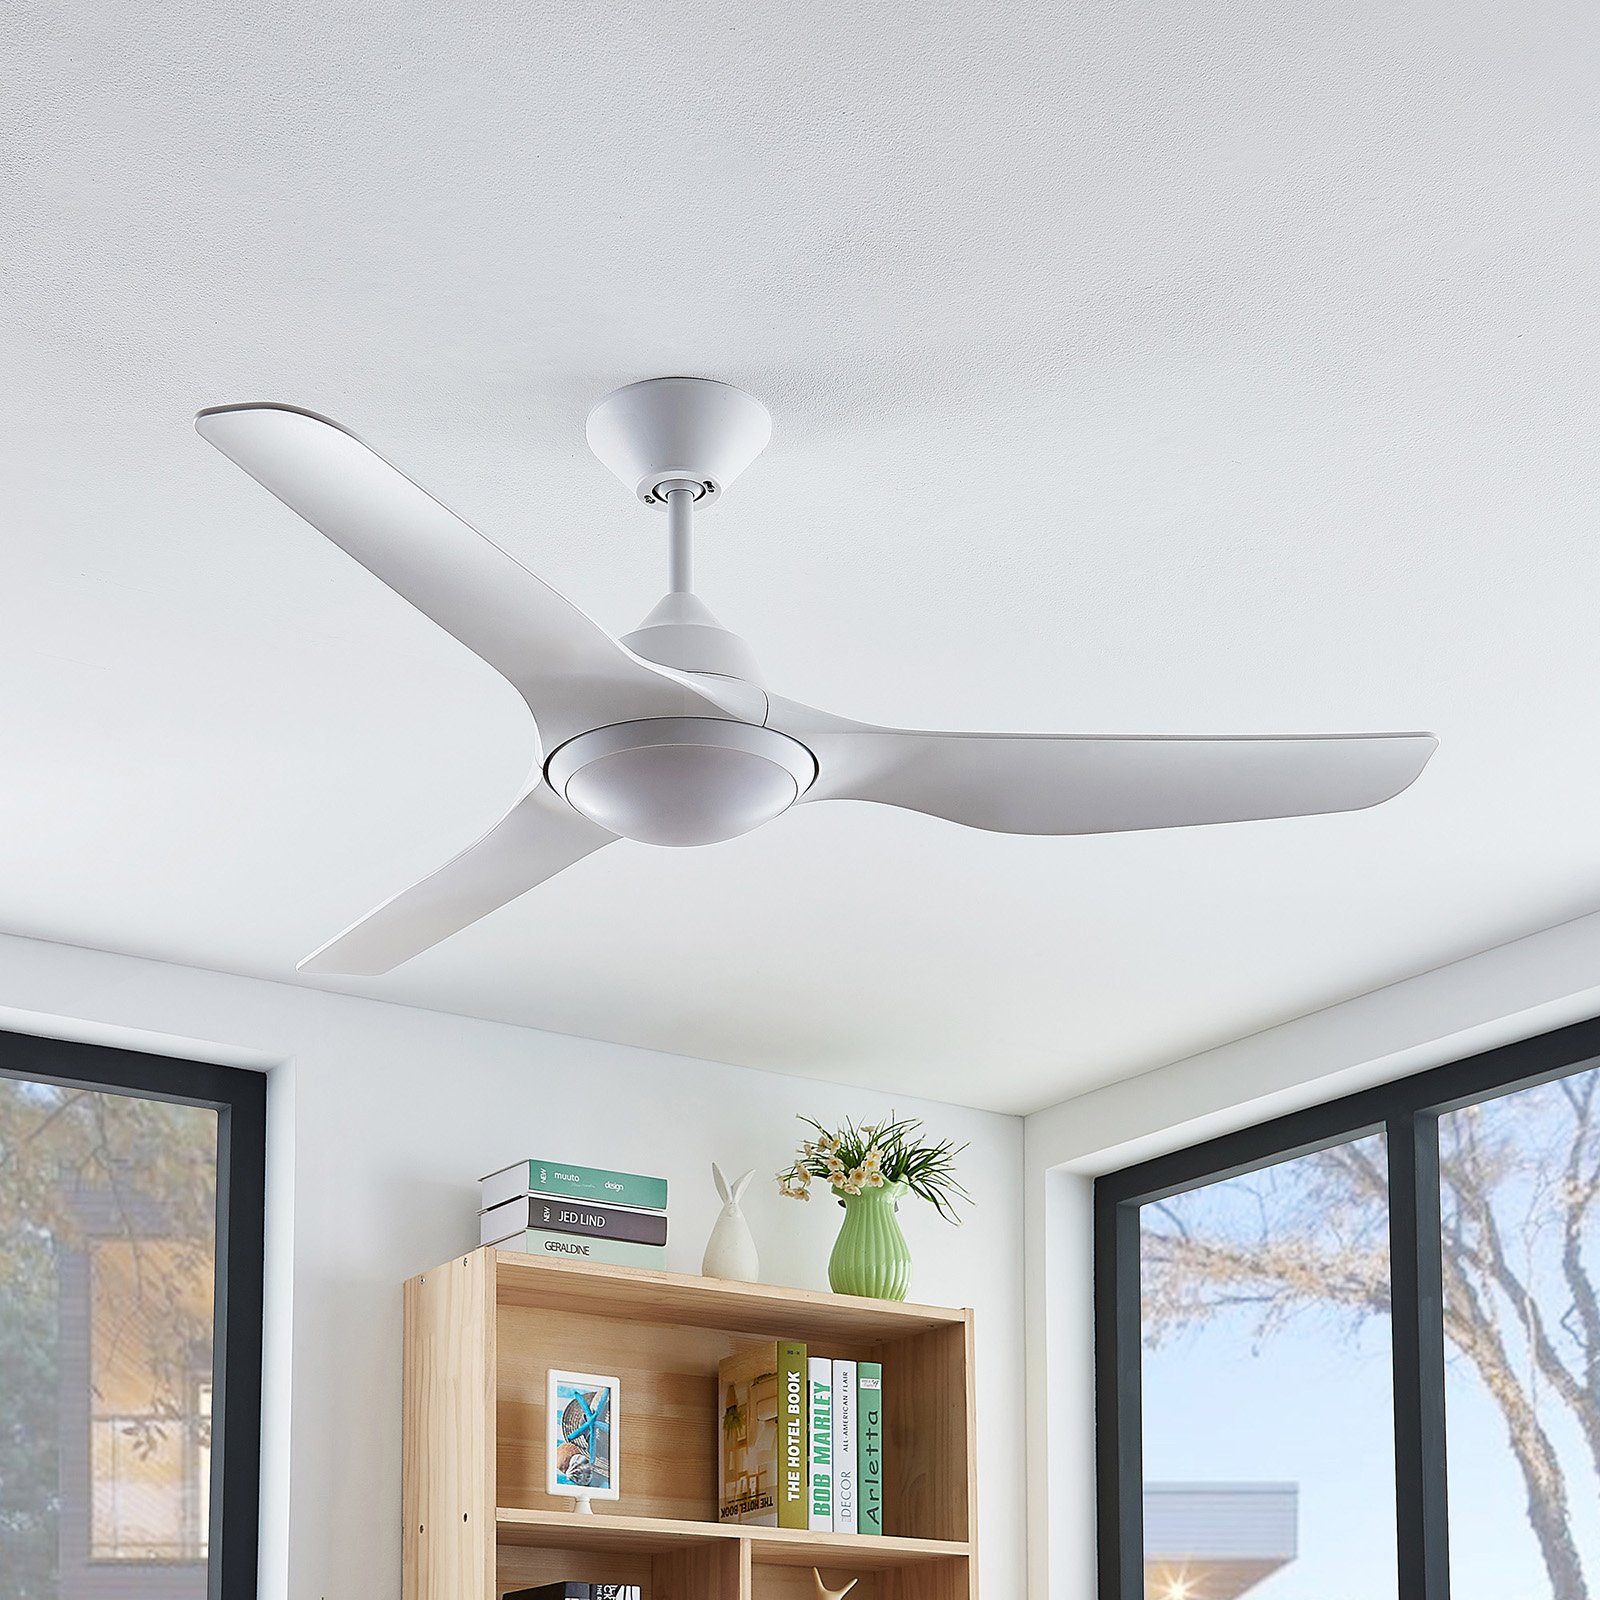 Starluna Pira LED ceiling fan, 3 blades, white